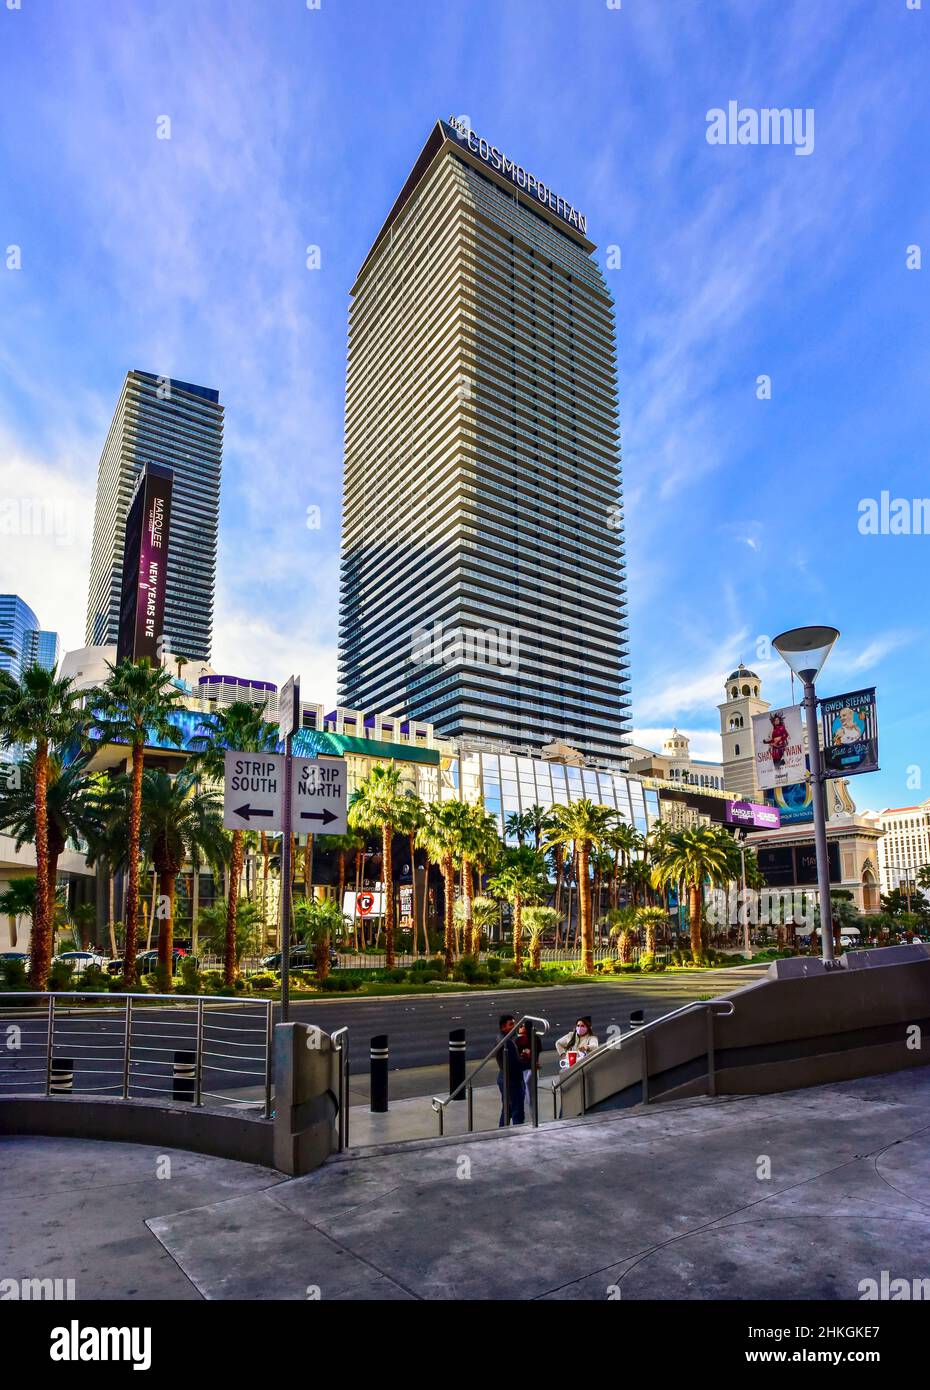 Le Cosmopolitan Resort and Casino sur le Strip de Las Vegas, Las Vegas, Nevada Banque D'Images